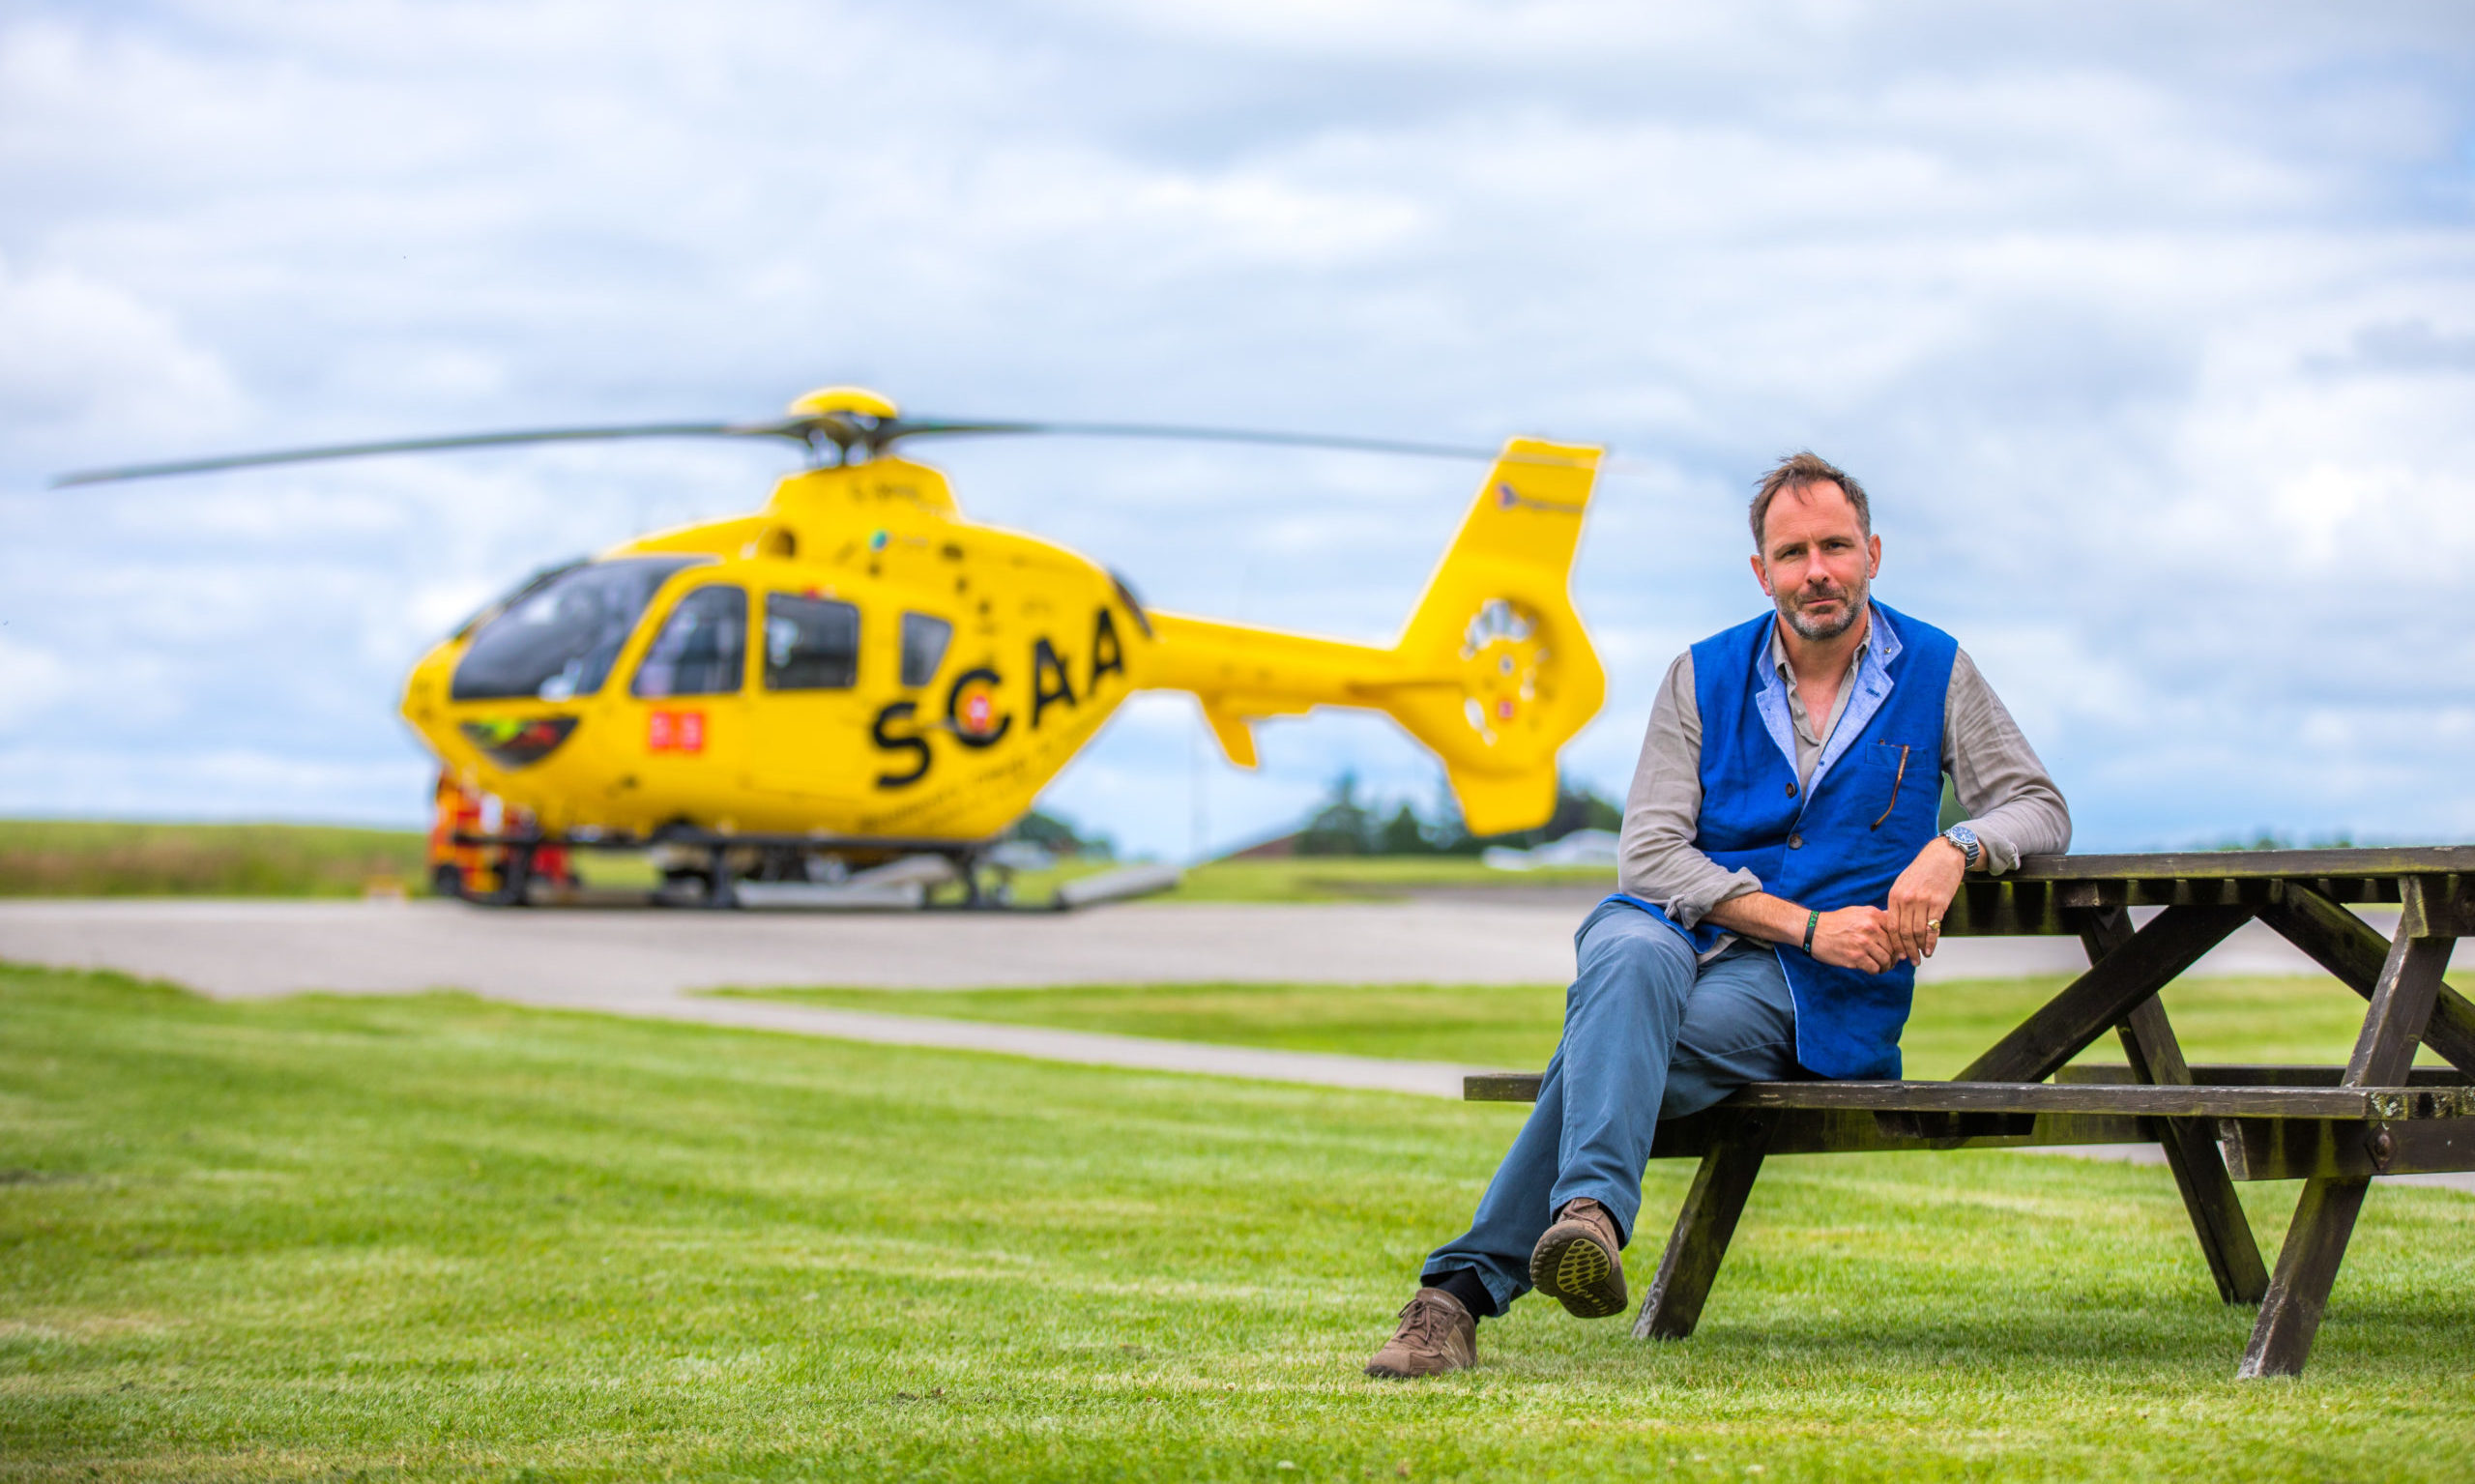 John Bullough, founding chairman of Scotland's Charity Air Ambulance based at Perth Airport